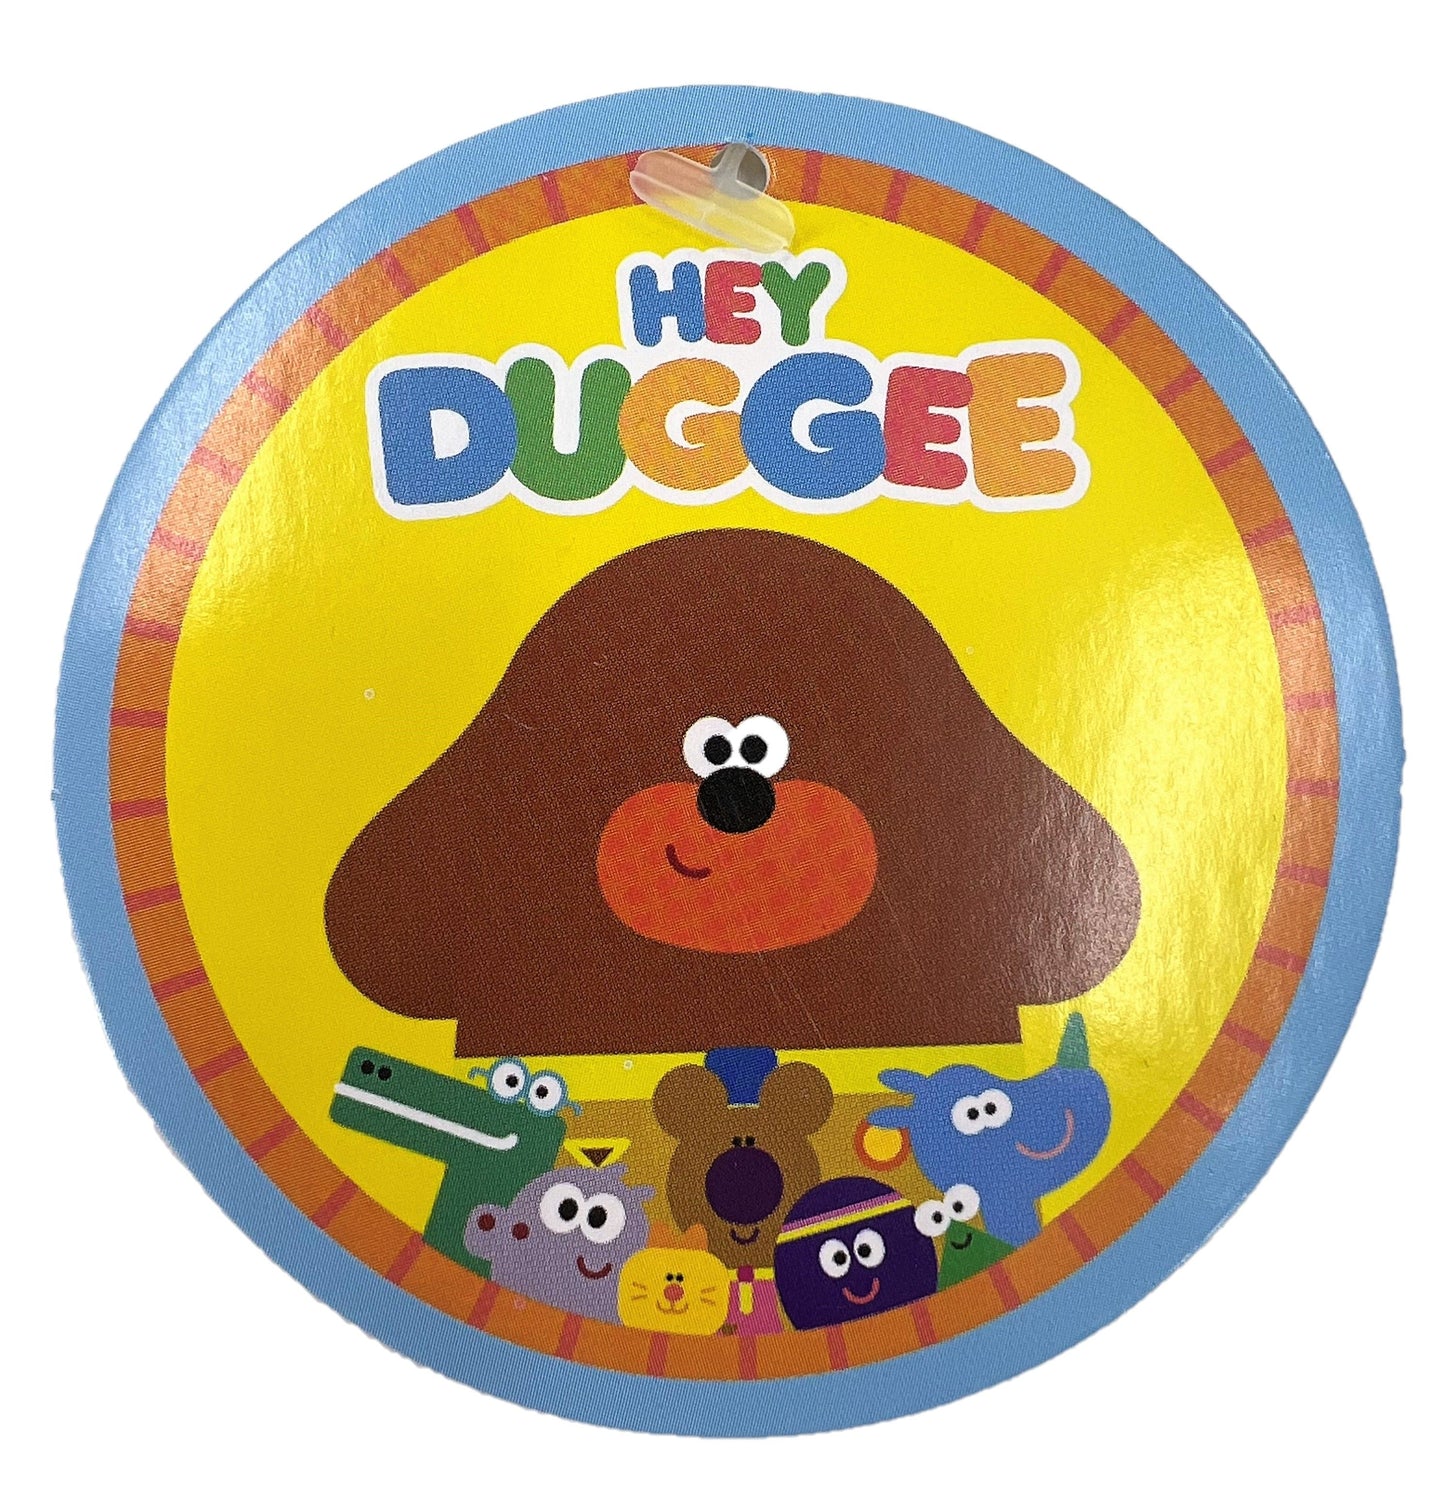 Hey Duggee "Hug" Boy's Pyjama Set